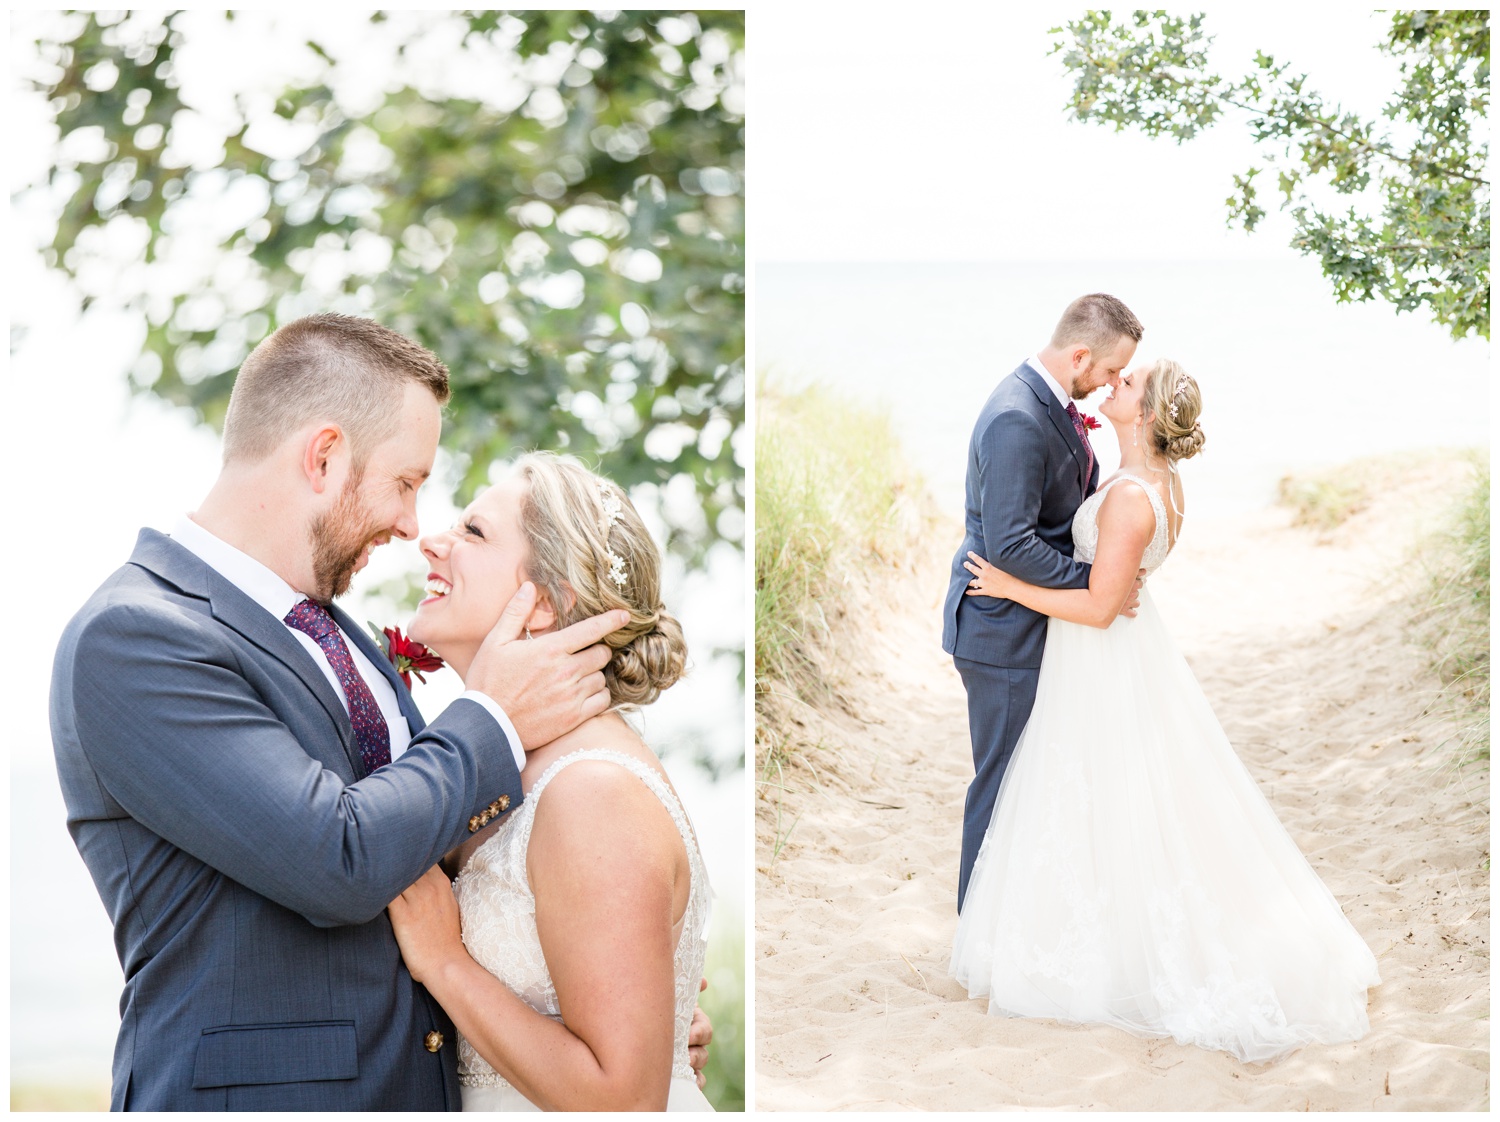 Beach Wedding Portraits - Bride and Groom